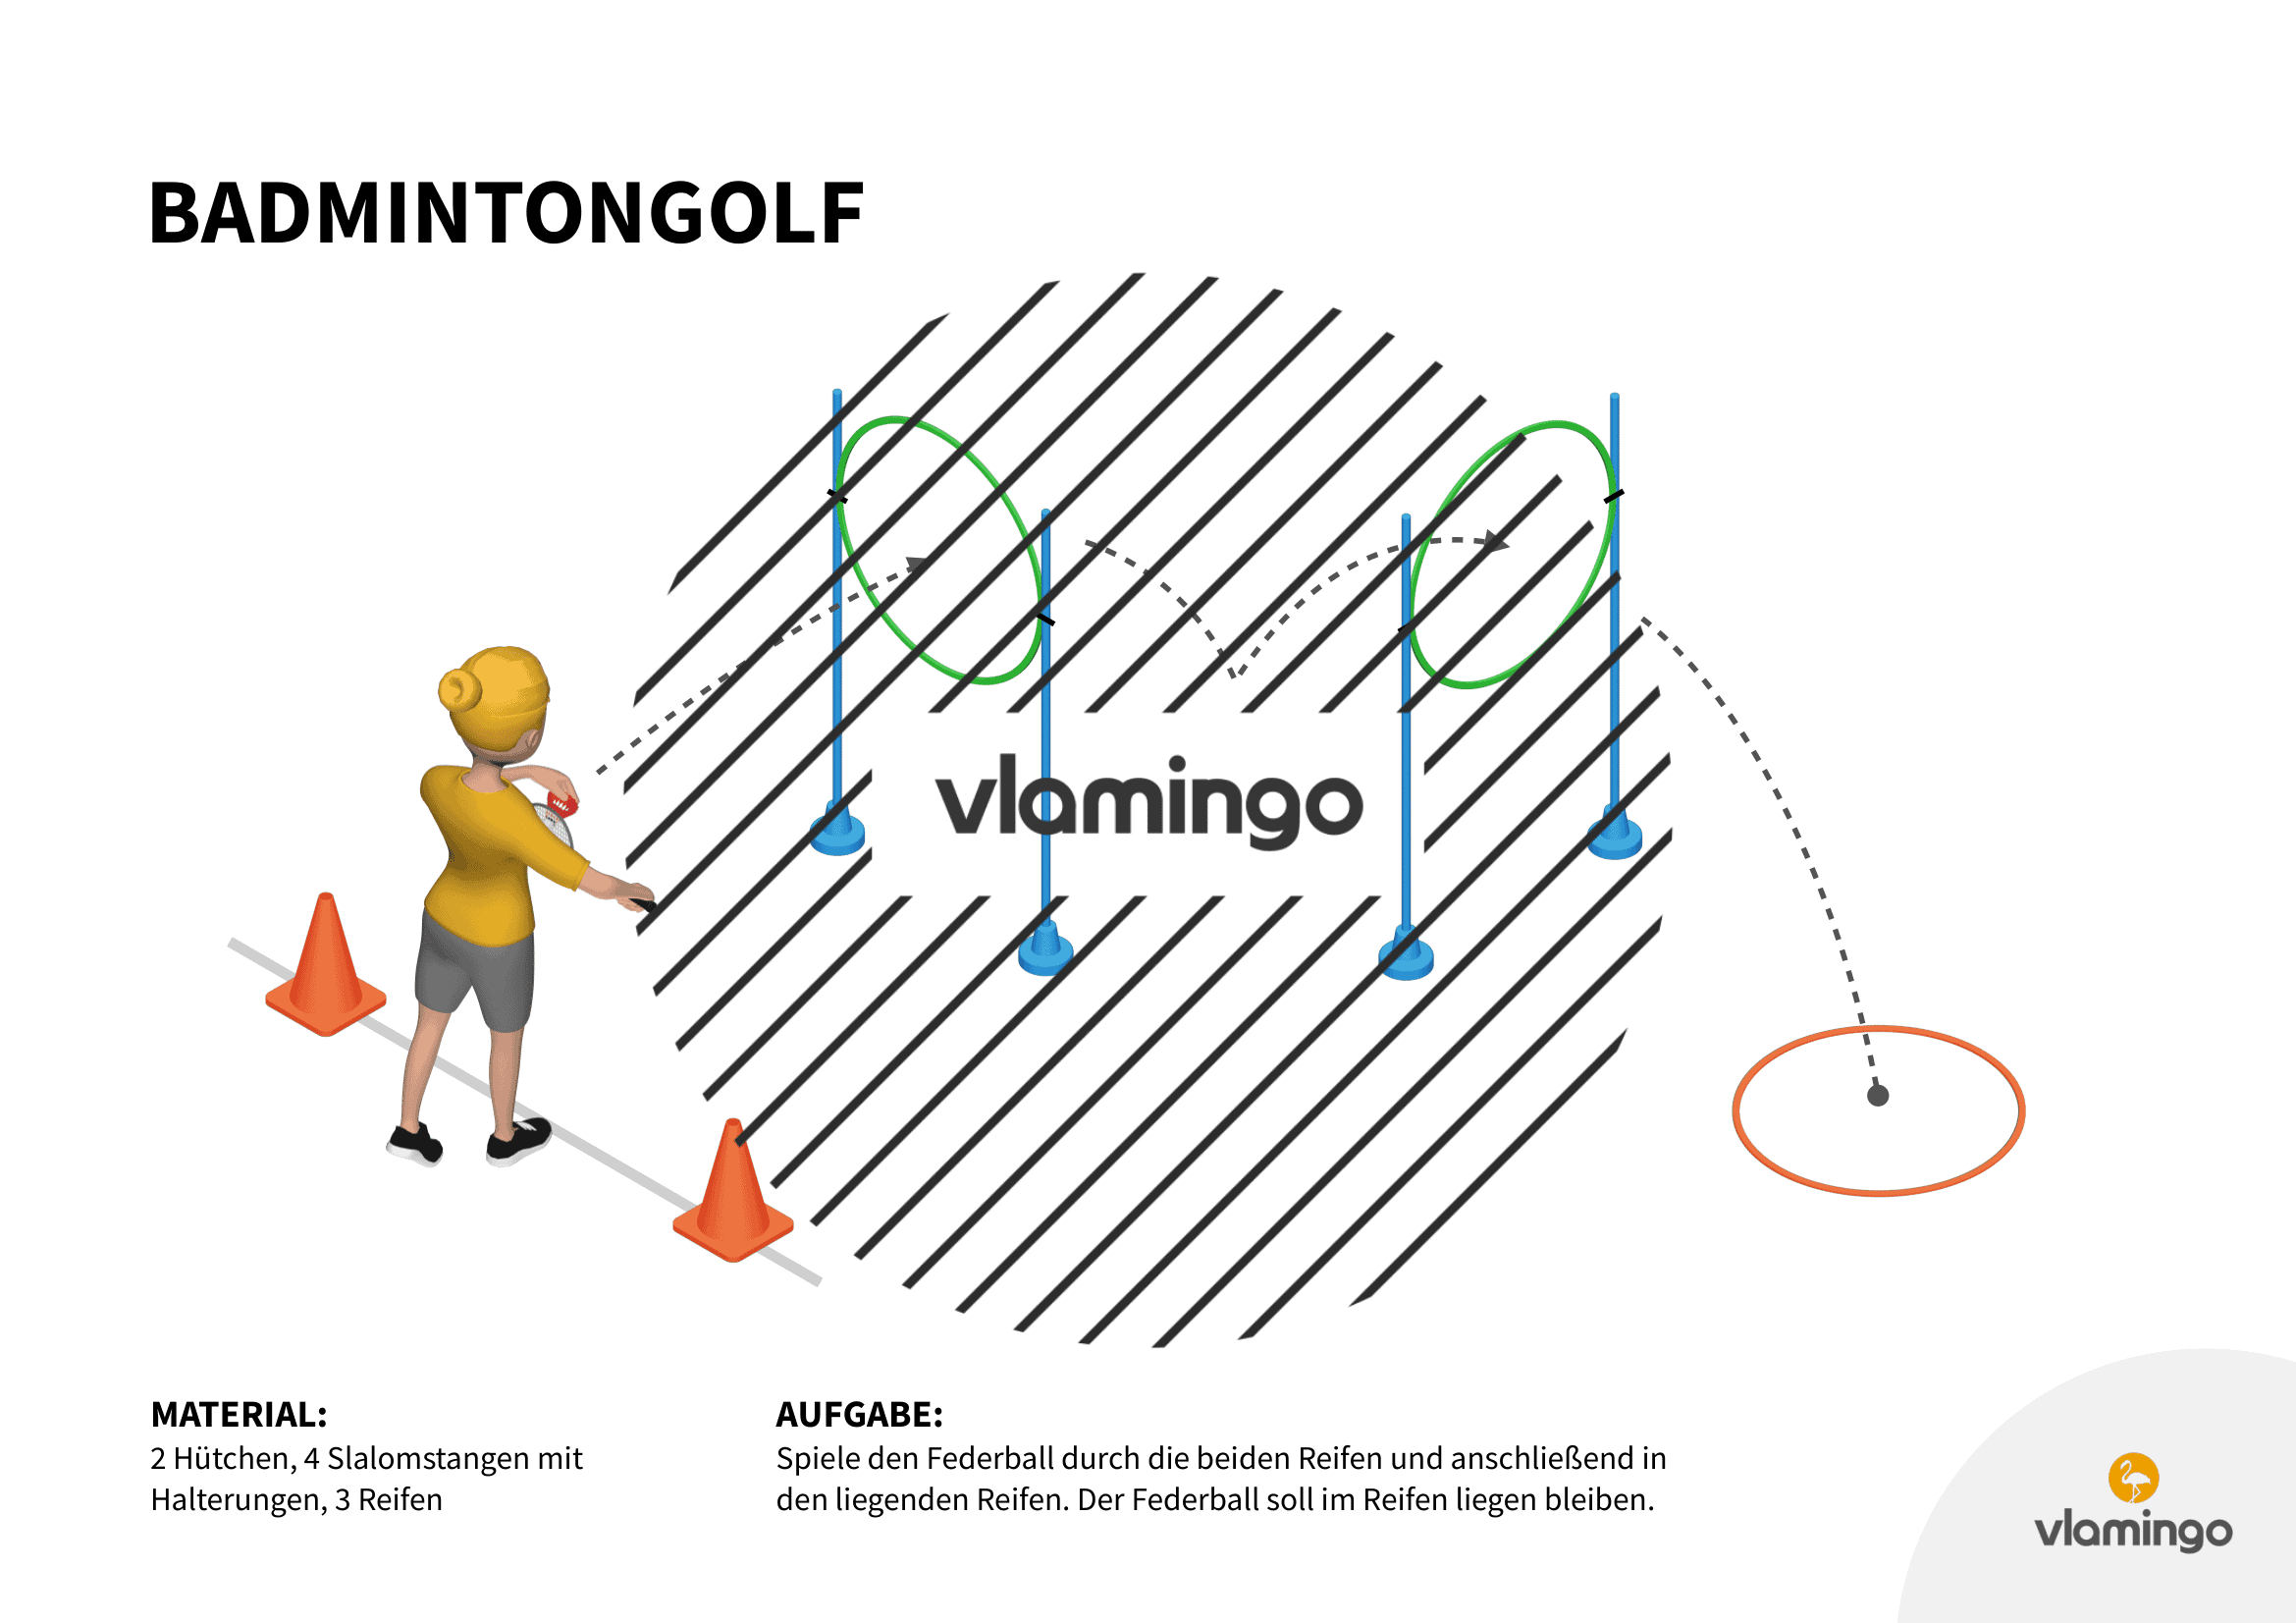 Badmintongolf - Station 8